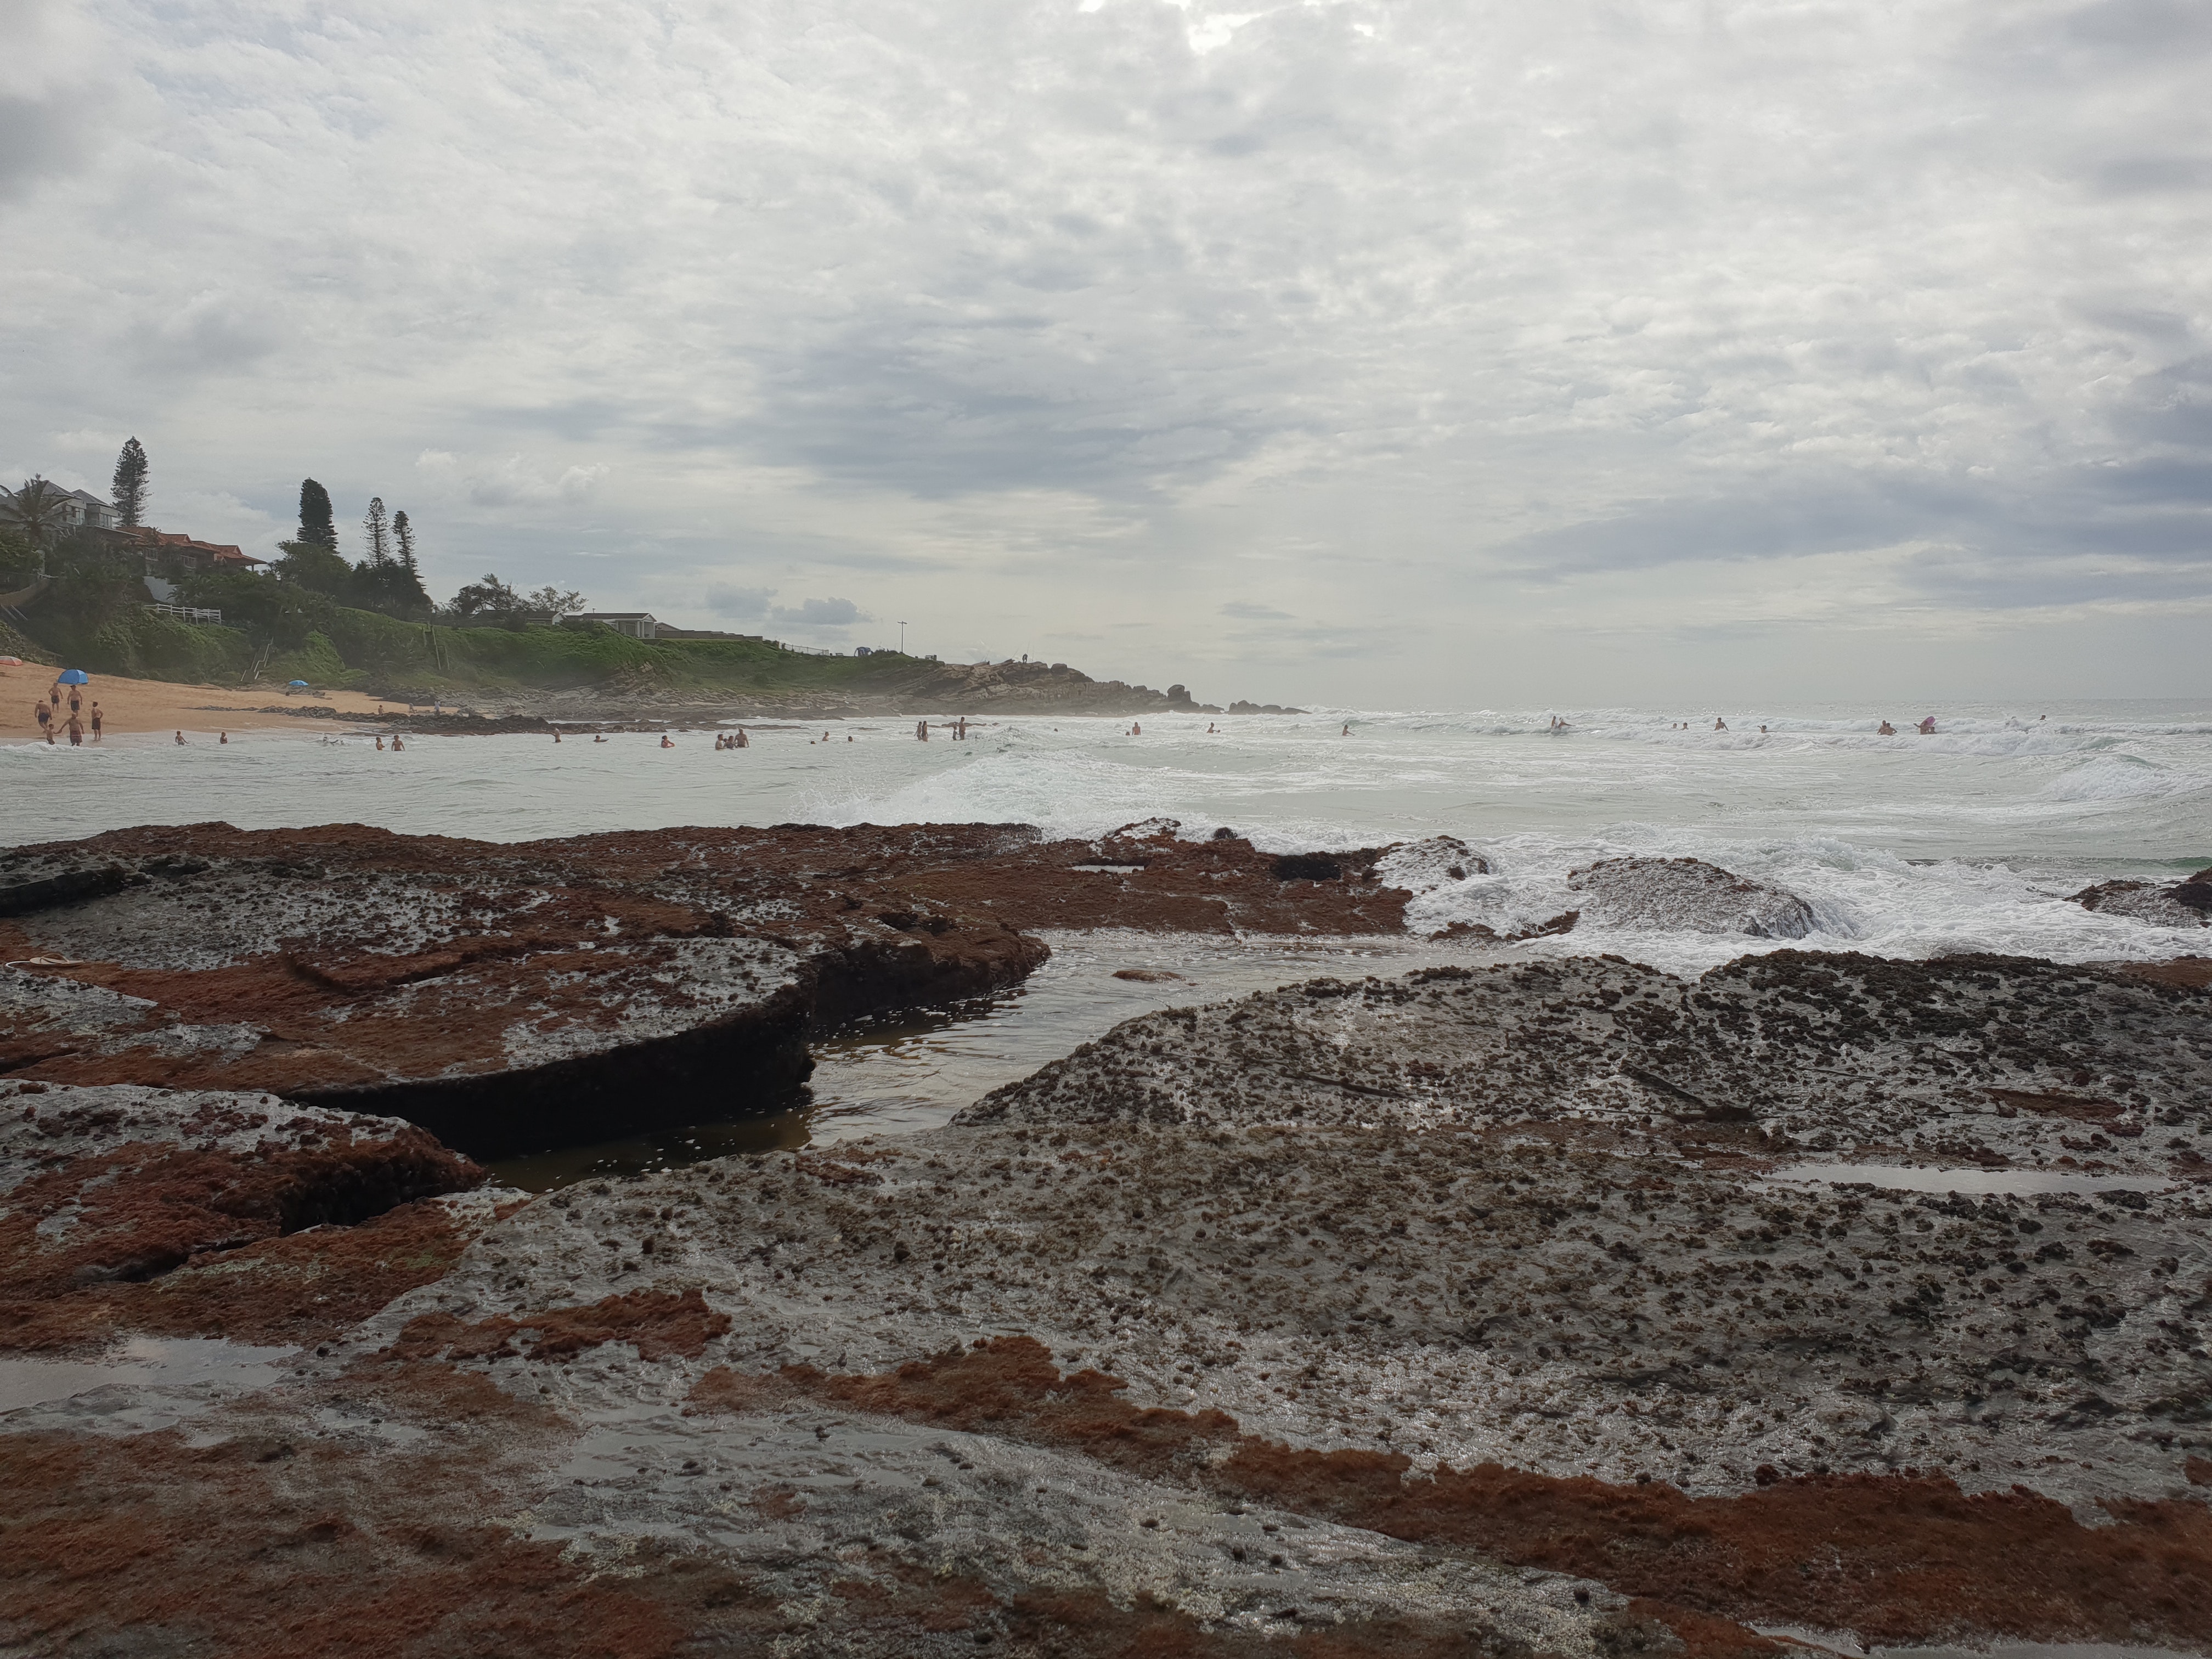 Waves crashing on the rocky beach photo